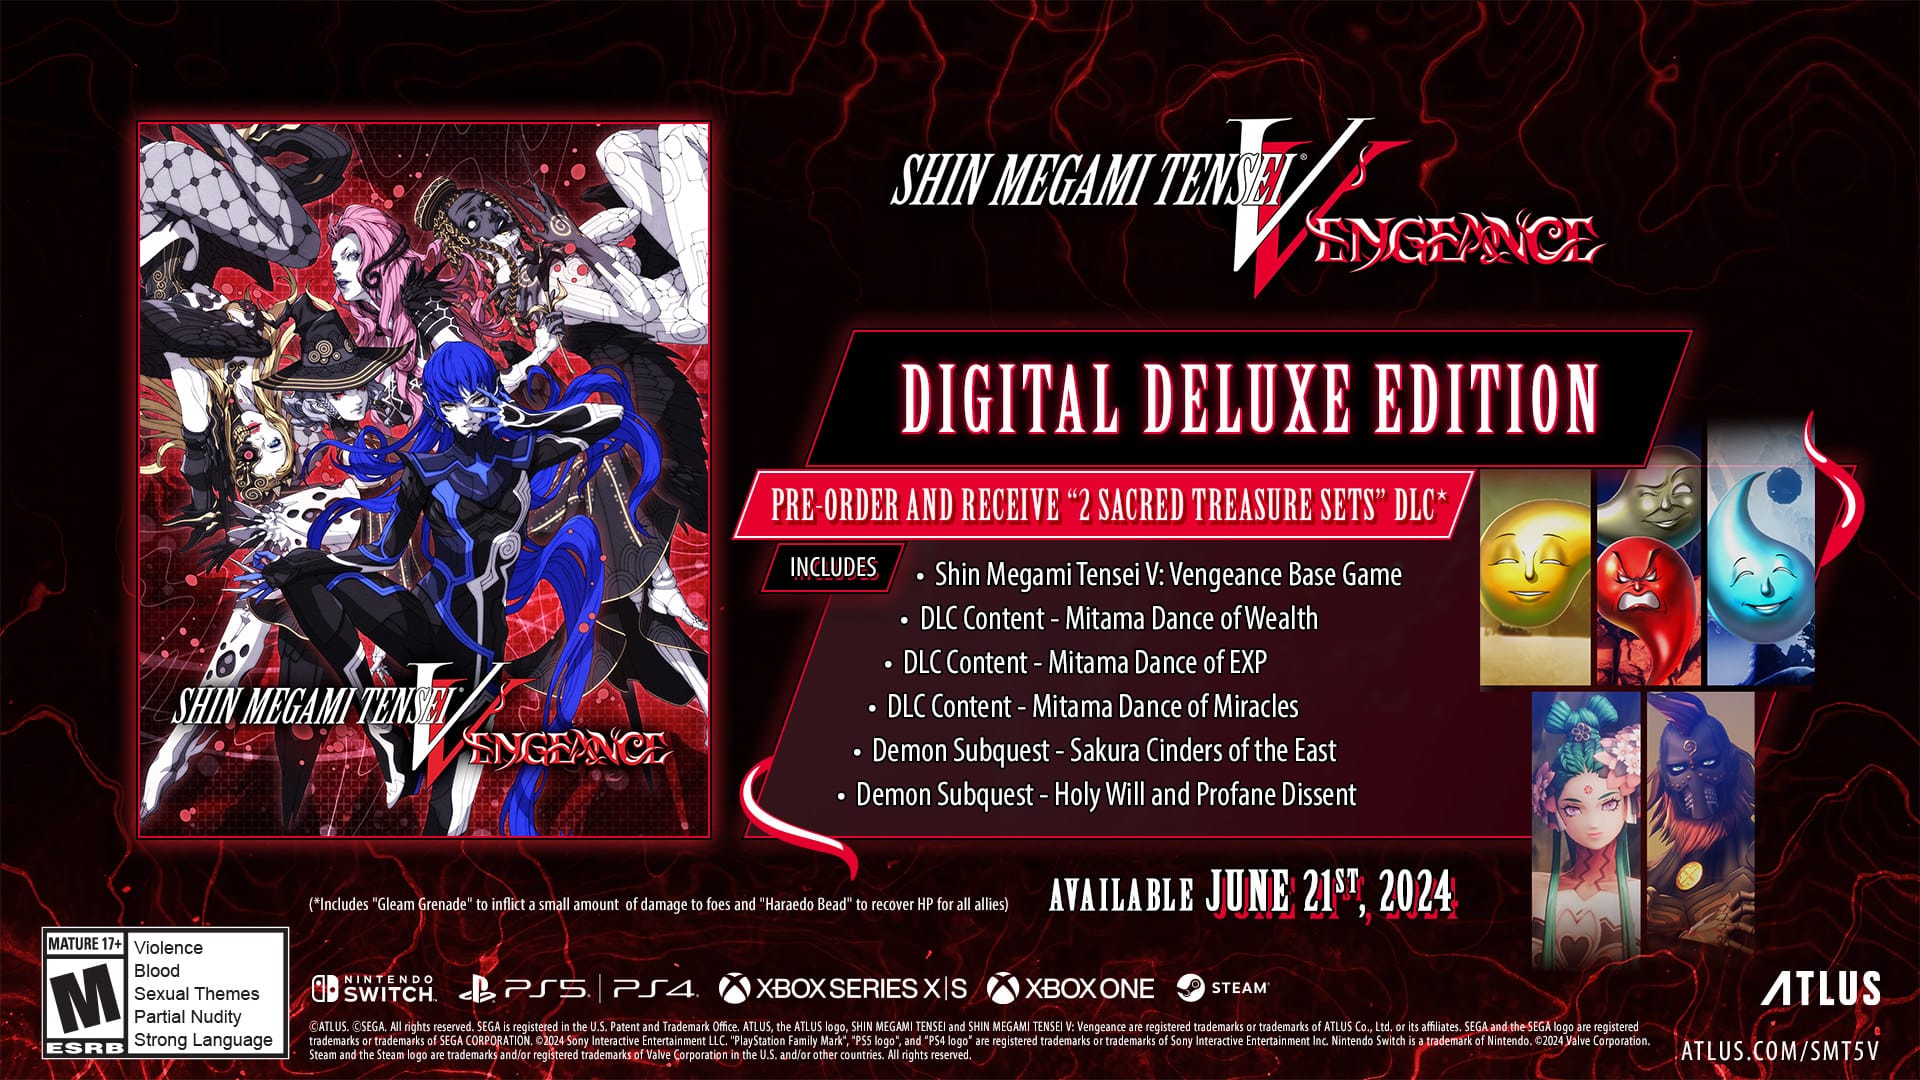 Shin Megami Tensei Vengance Digital Deluxe Edition. Promo Photo provided by ATLUS